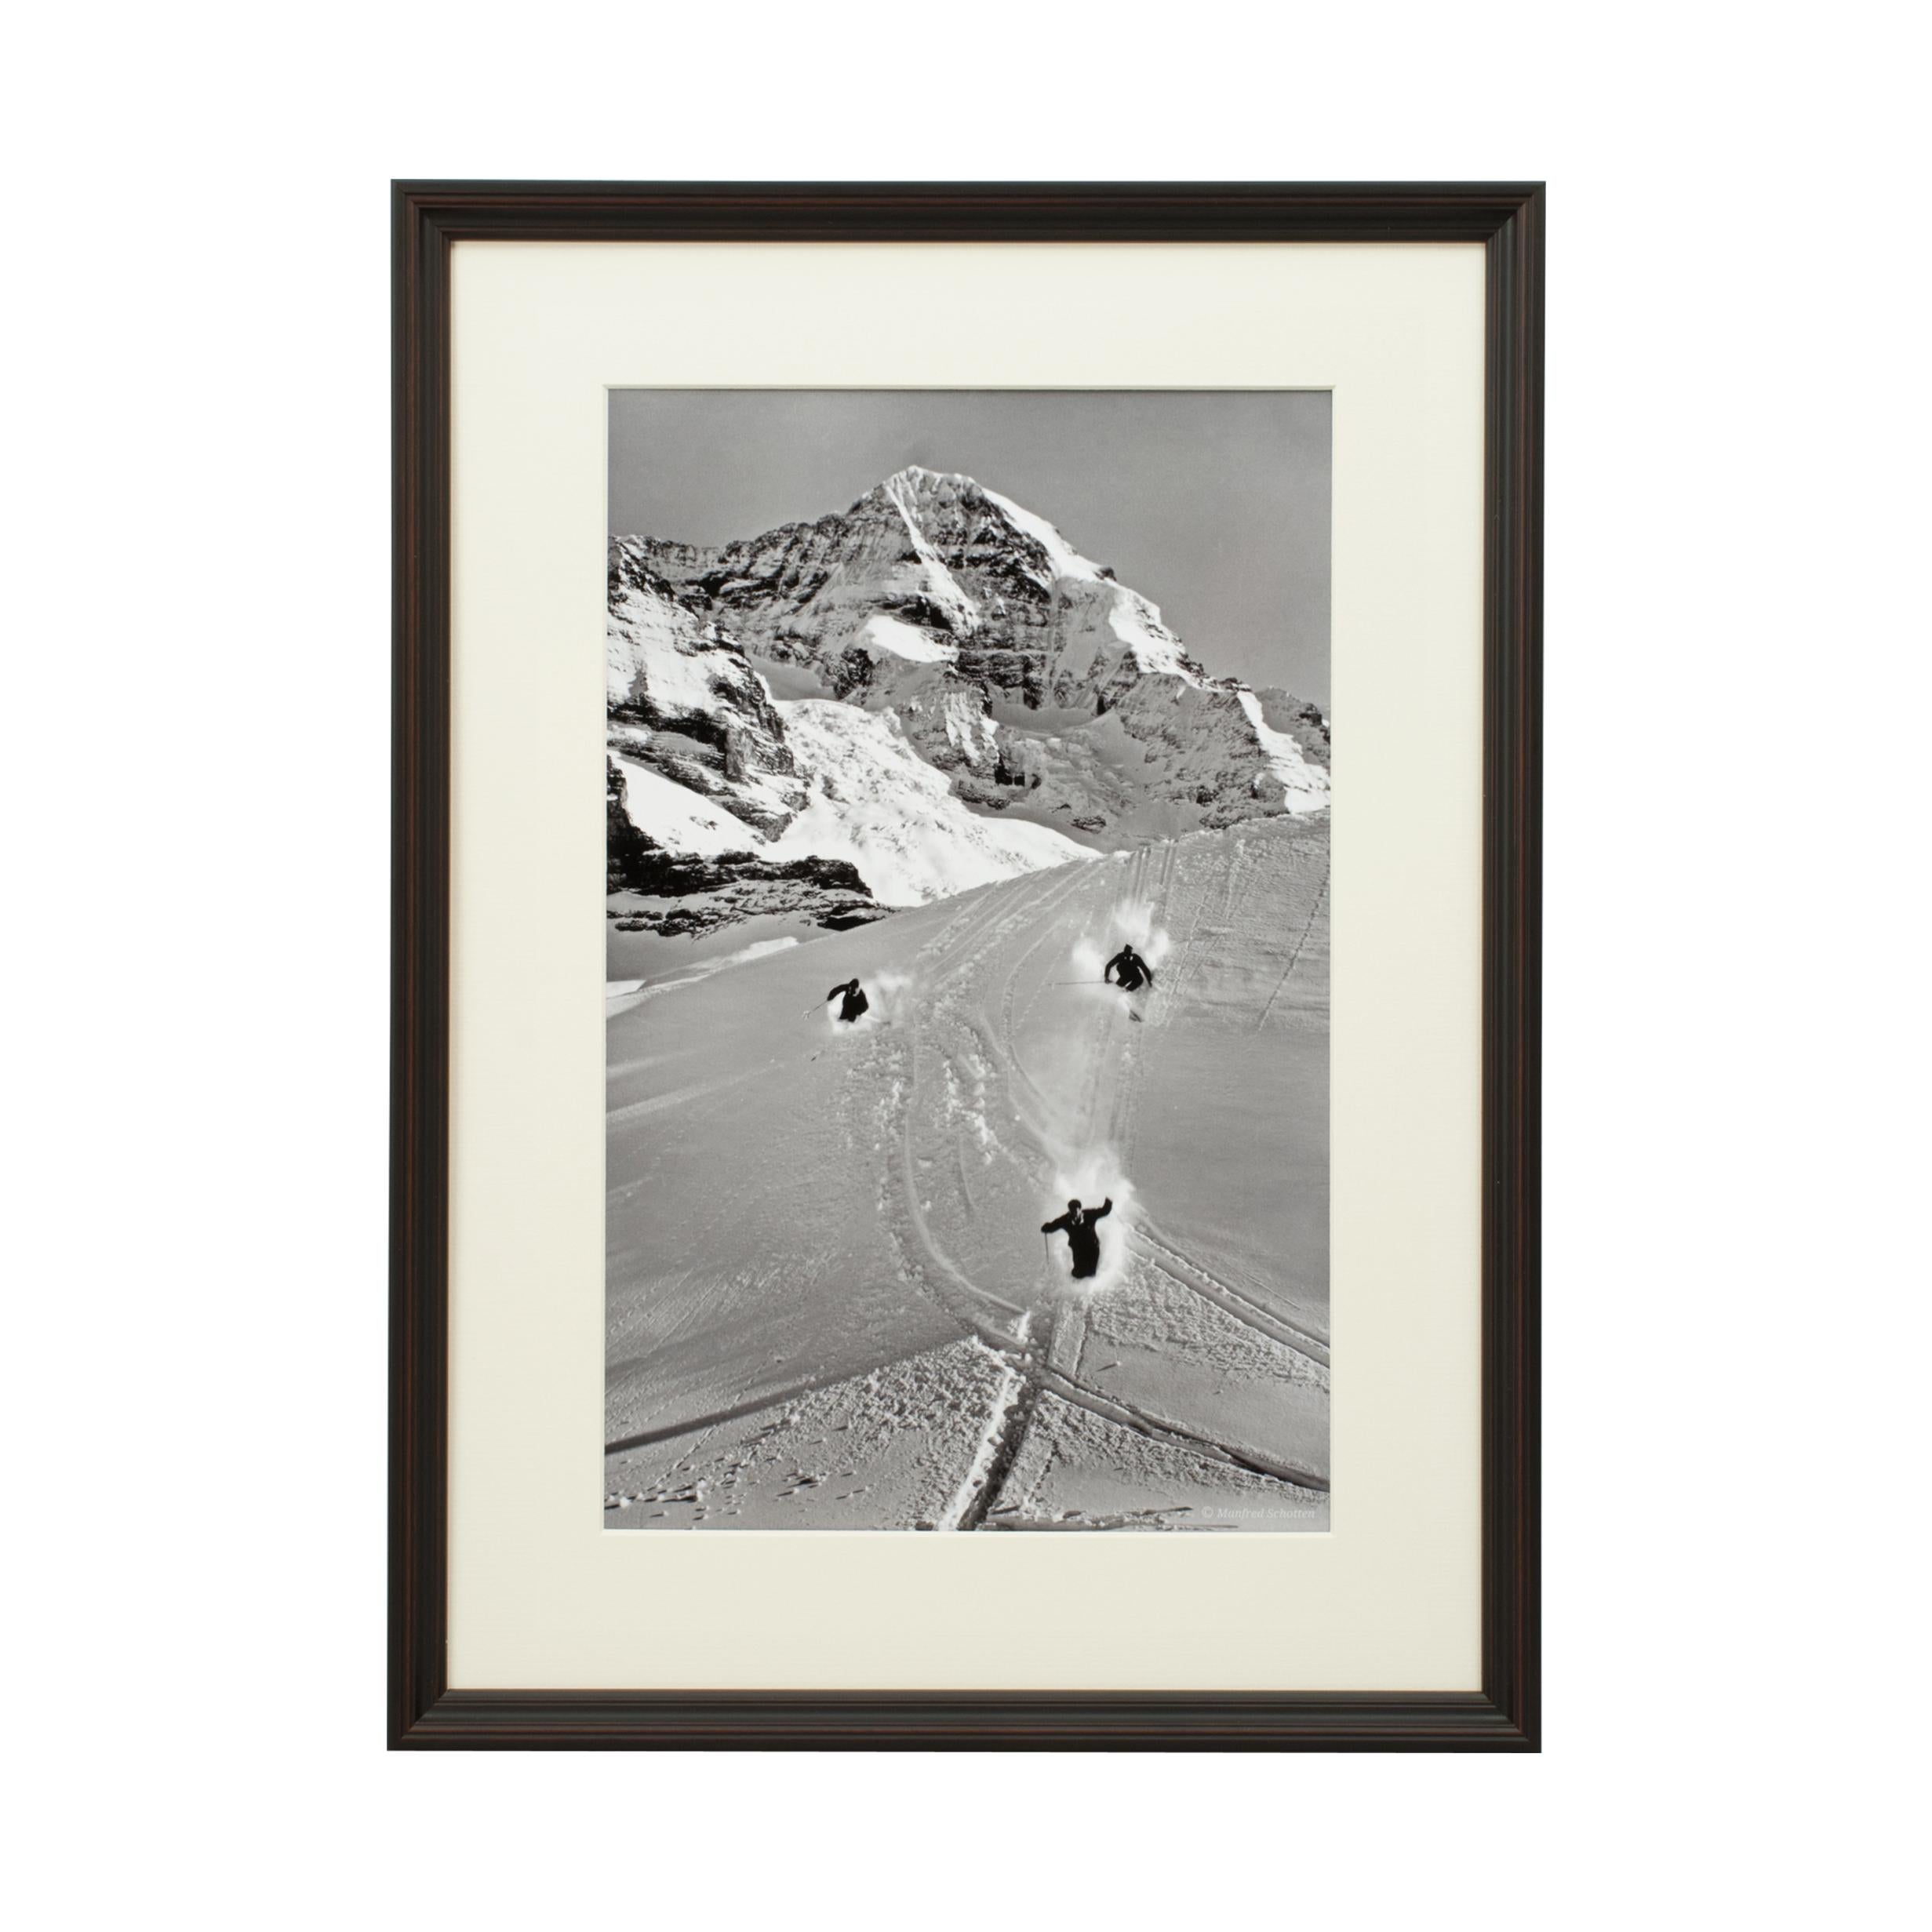 A set of 3 Vintage Style Ski Photography, Framed Alpine Ski Photograph, Matterhorn & Skiers, Der Sprung and Scheidegg.

'MATTERHORN & SKIERS', a modern framed and mounted black and white photograph after an original 1930's skiing photograph. The